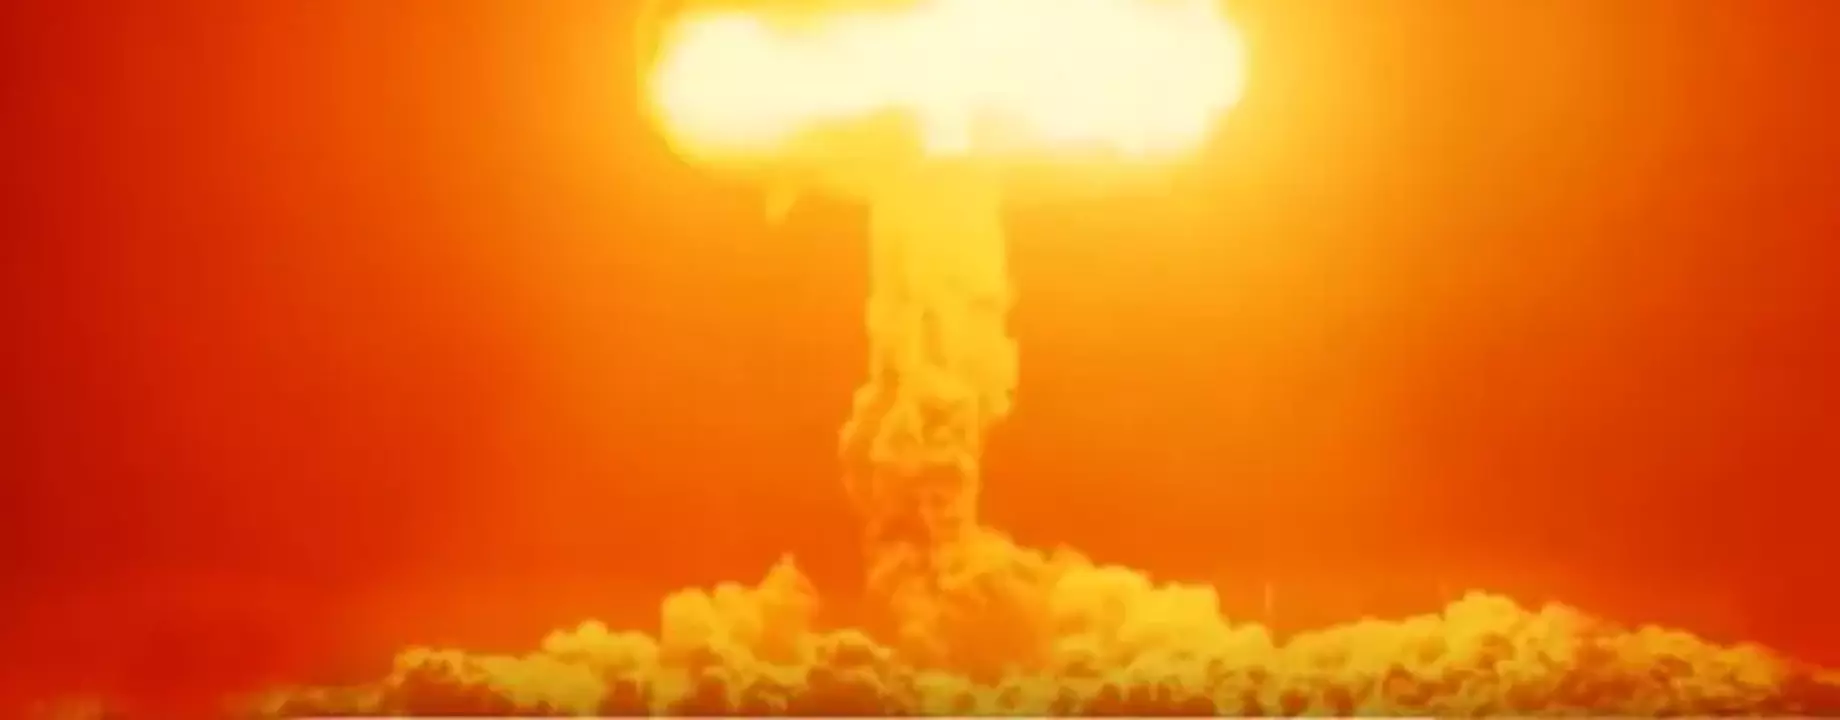 Nuclear blast 740